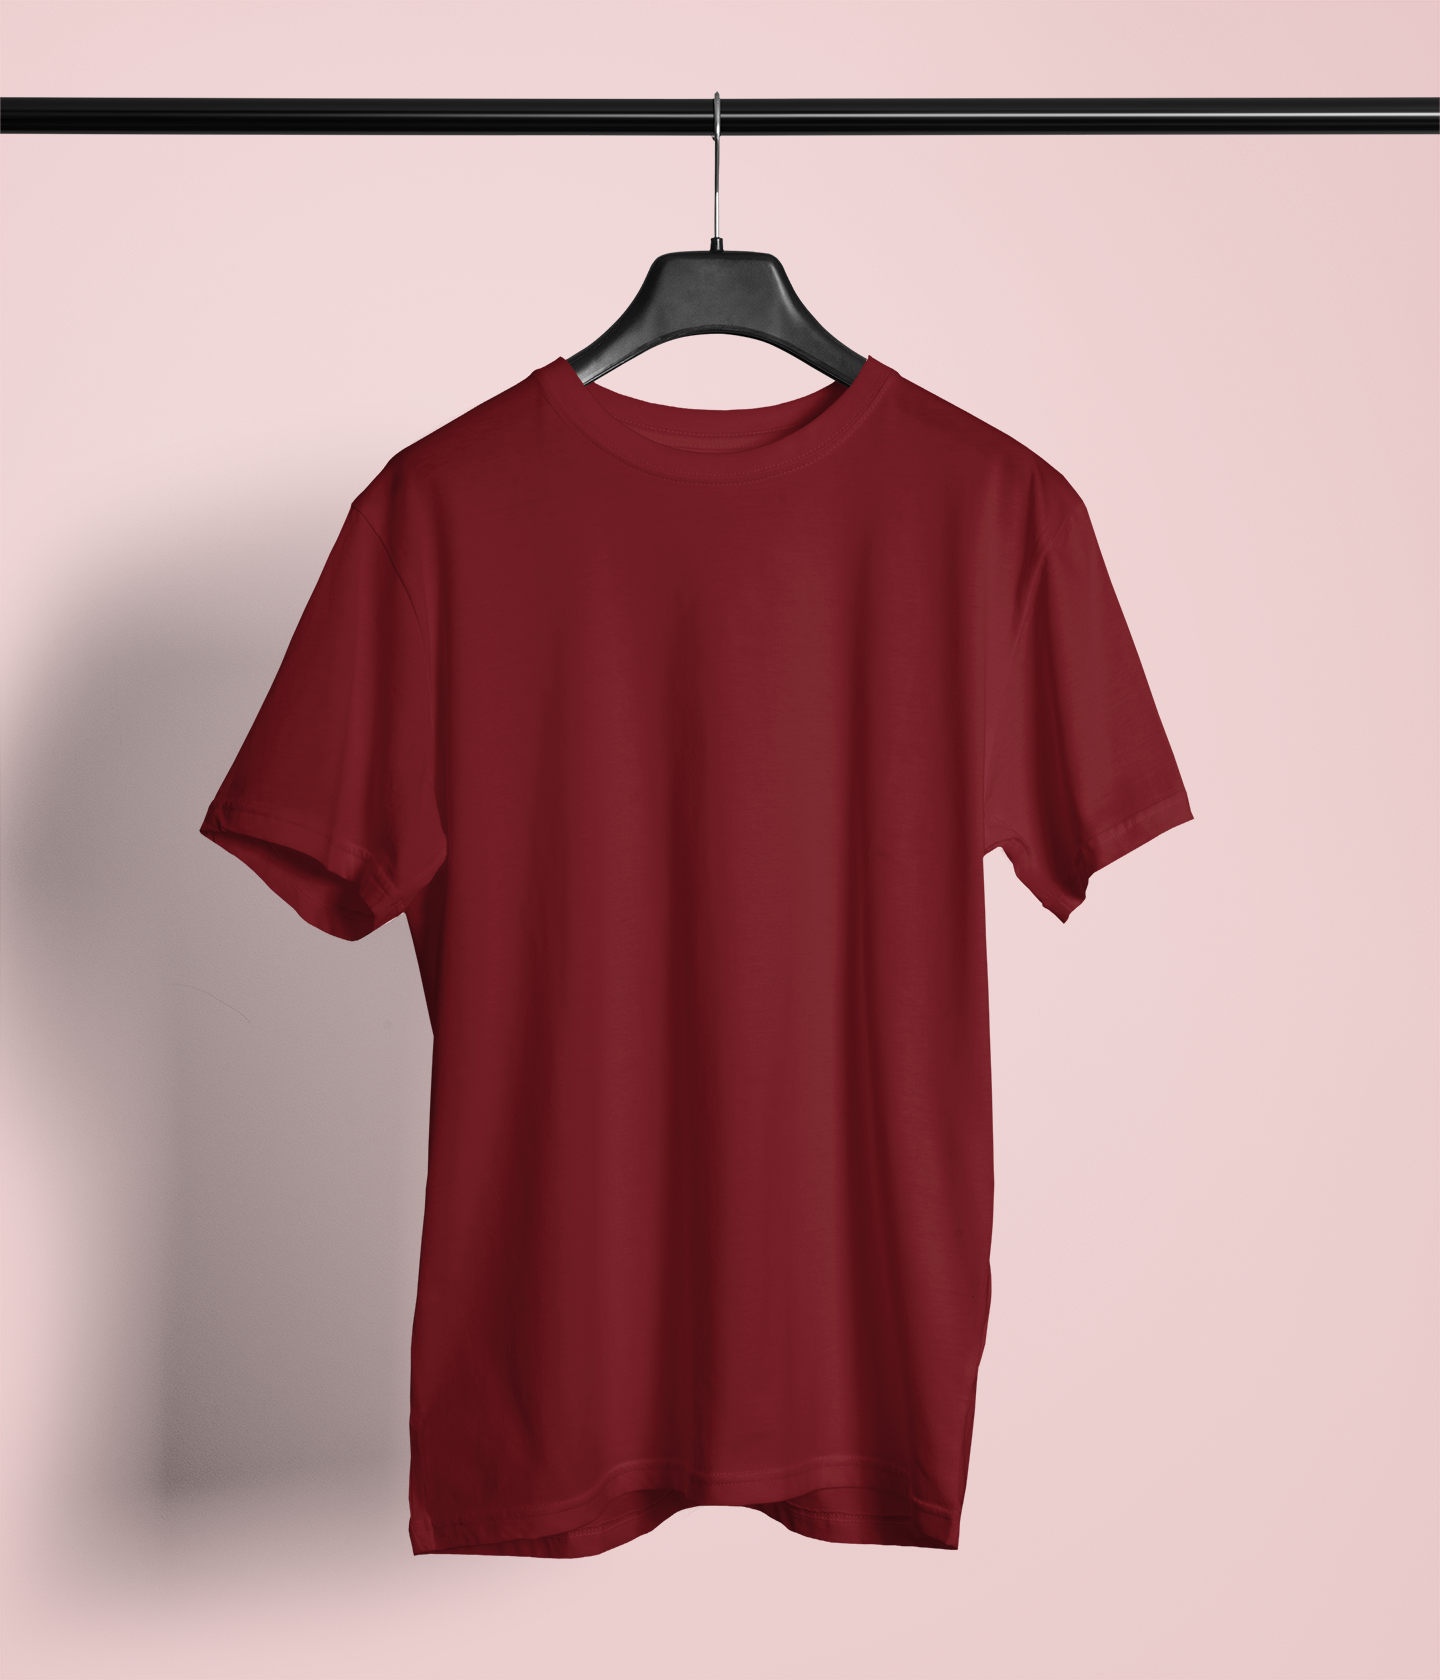 Round Neck Plain T-shirts for Men - Versatile Comfort for Every Wardrobe